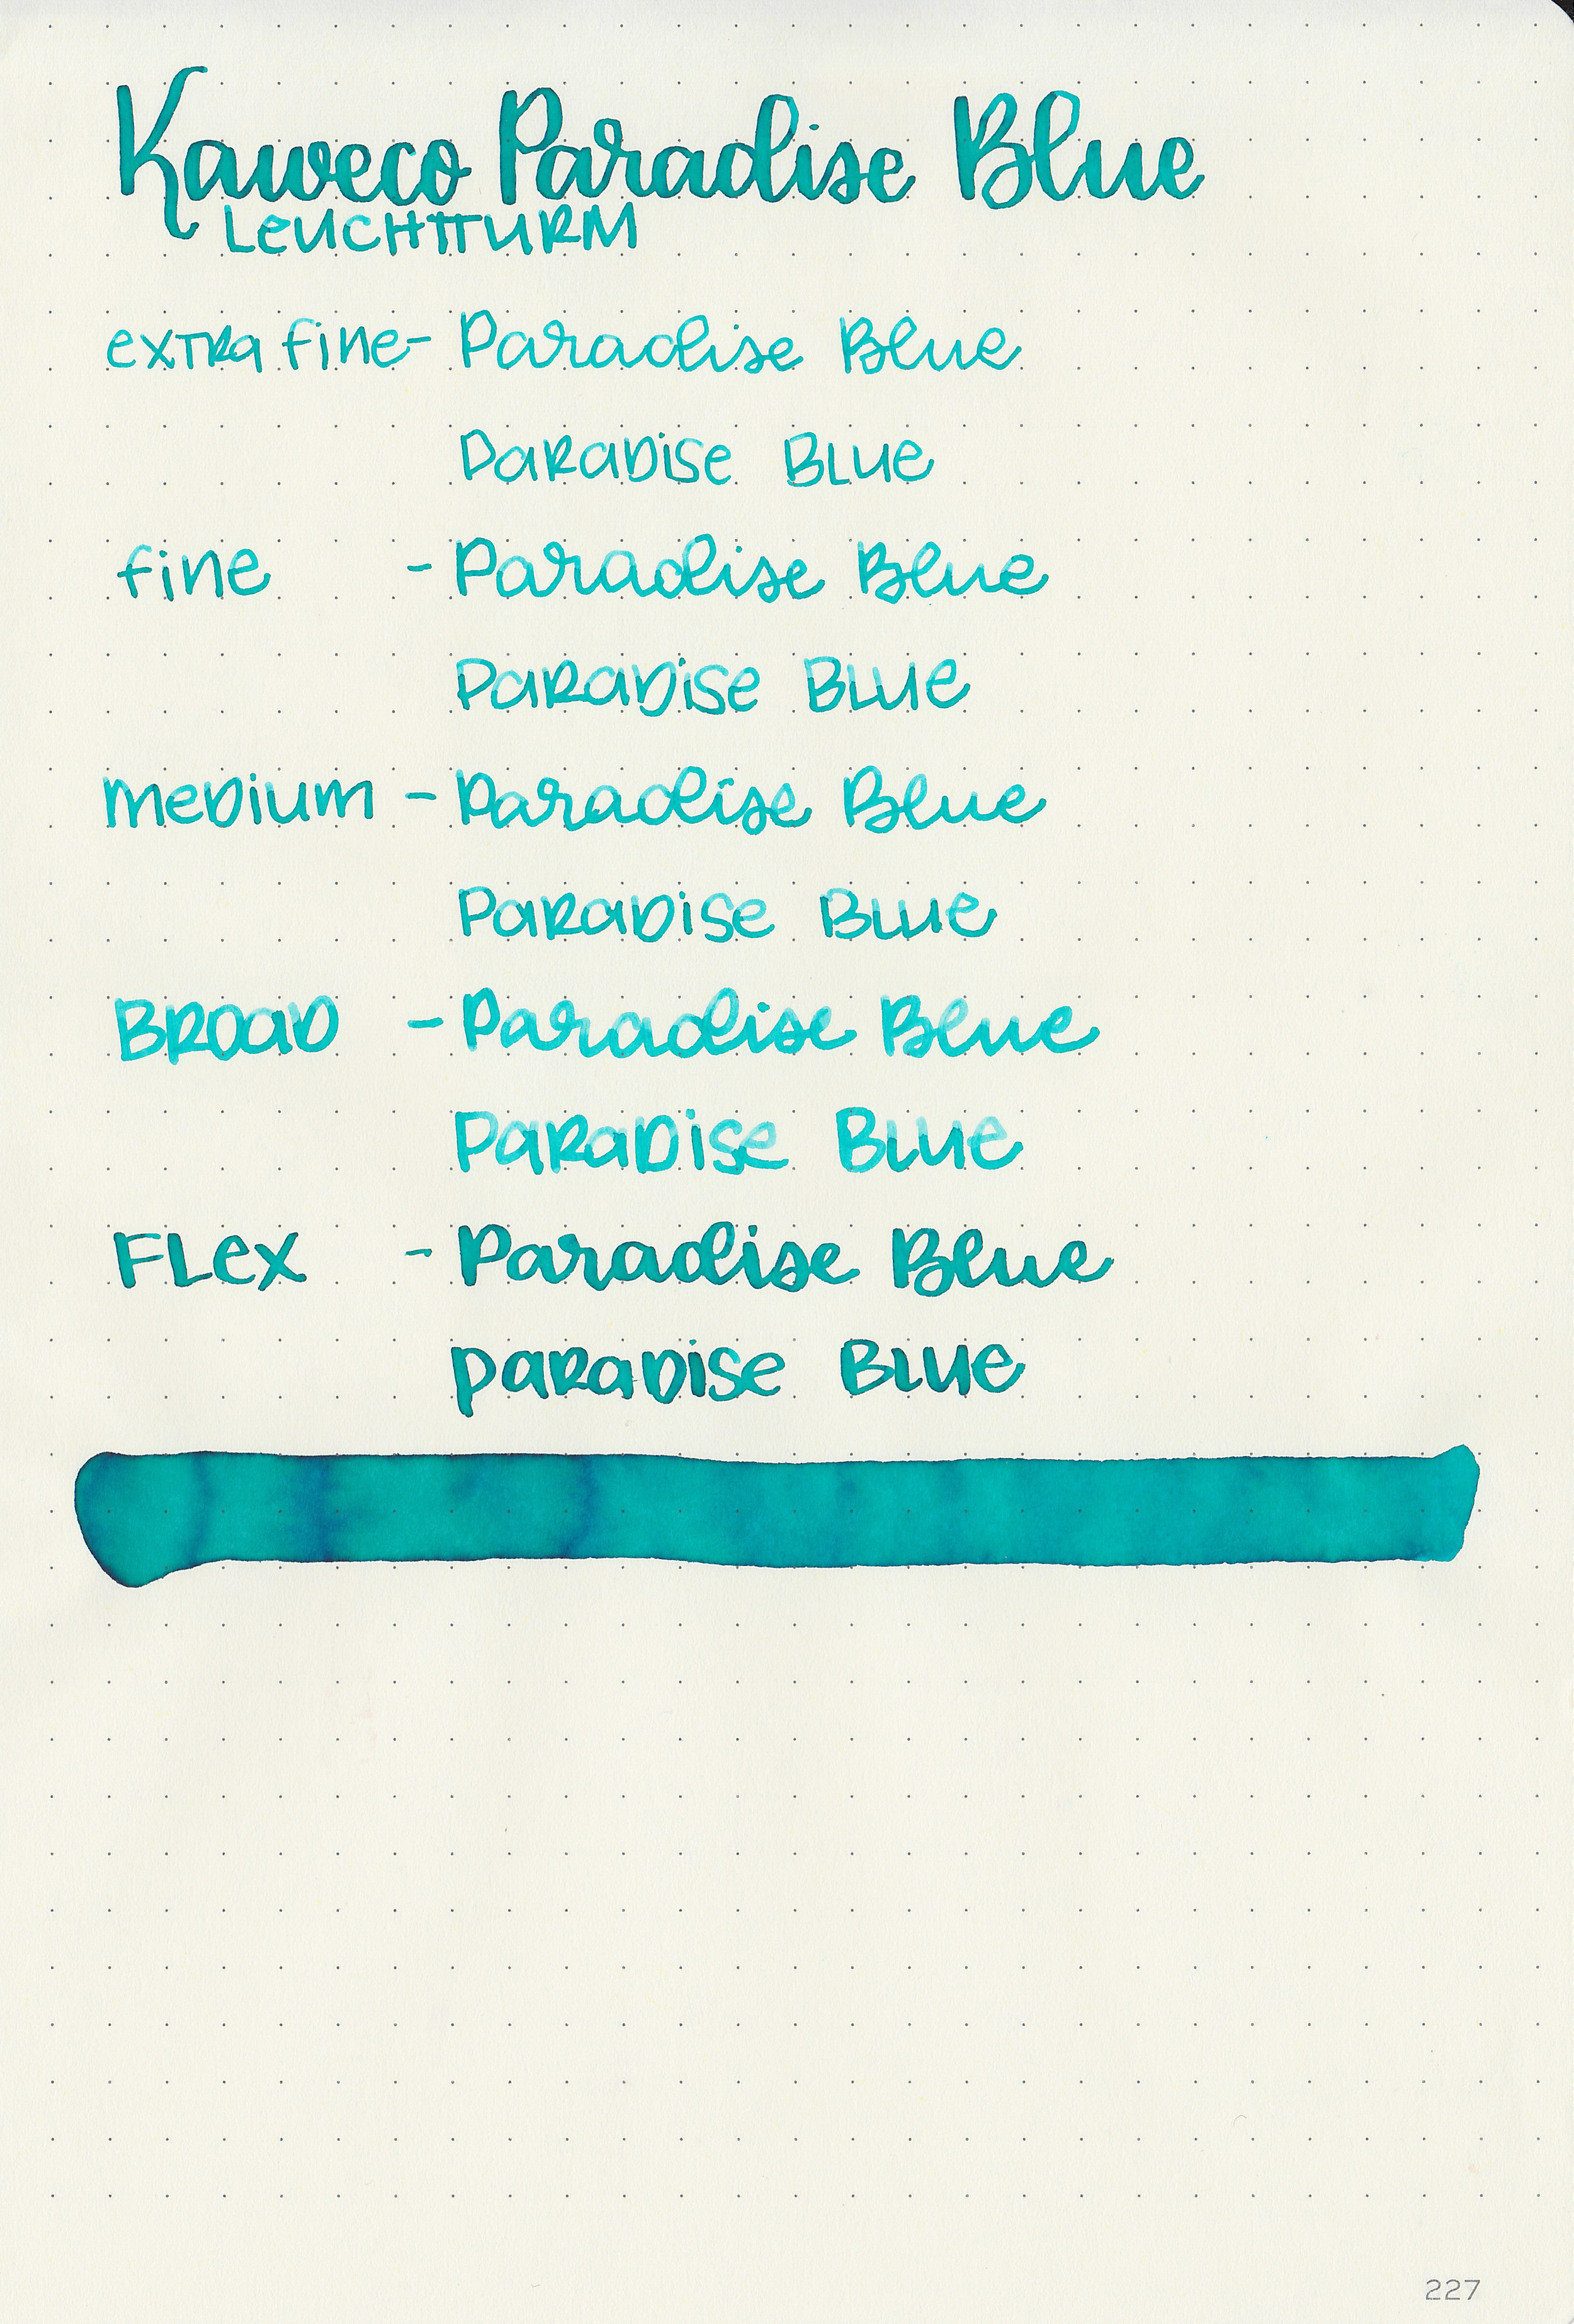 kw-paradise-blue-9.jpg